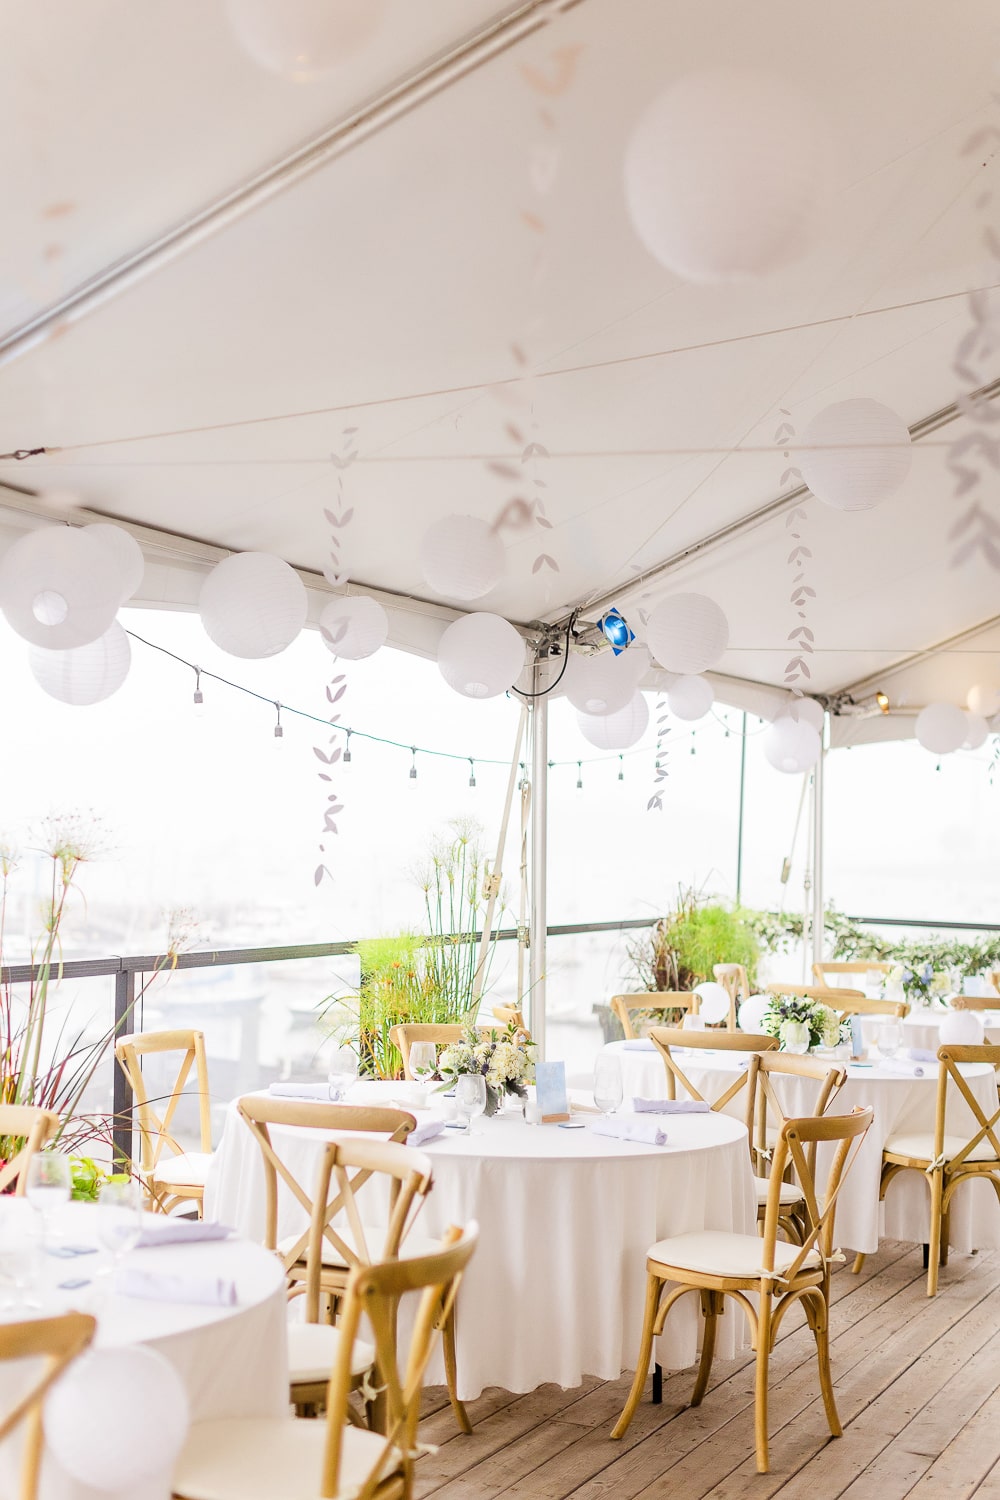 Blogger Stephanie Ziajka shares ways to save on wedding decor on Diary of a Debutante